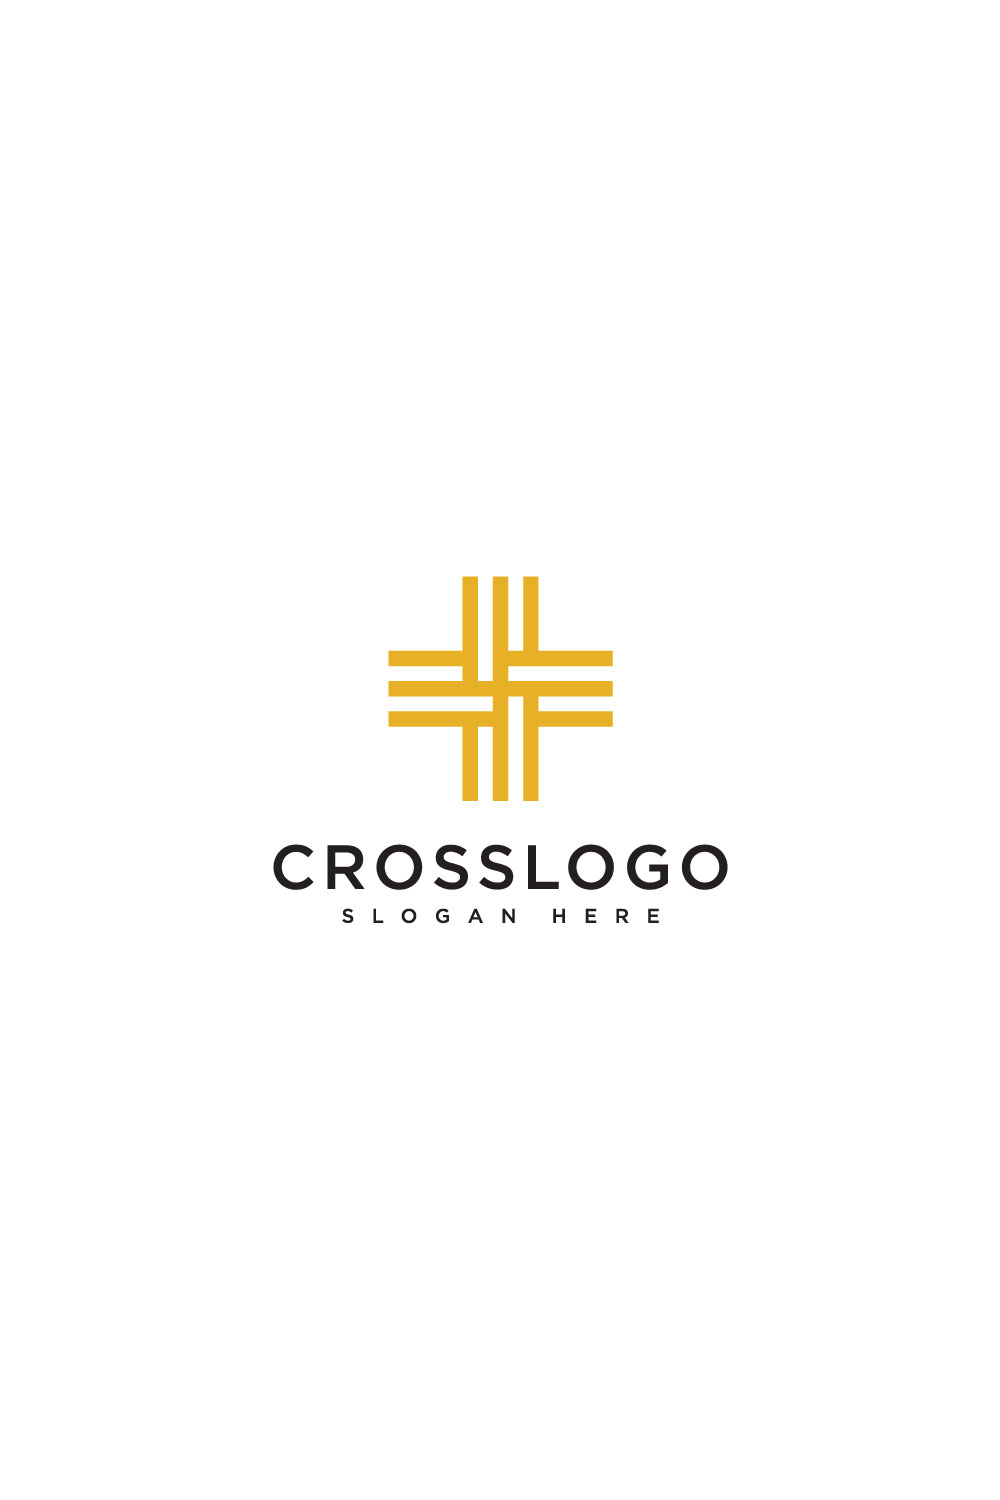 Cross Logo Vector Design - Pinterest.